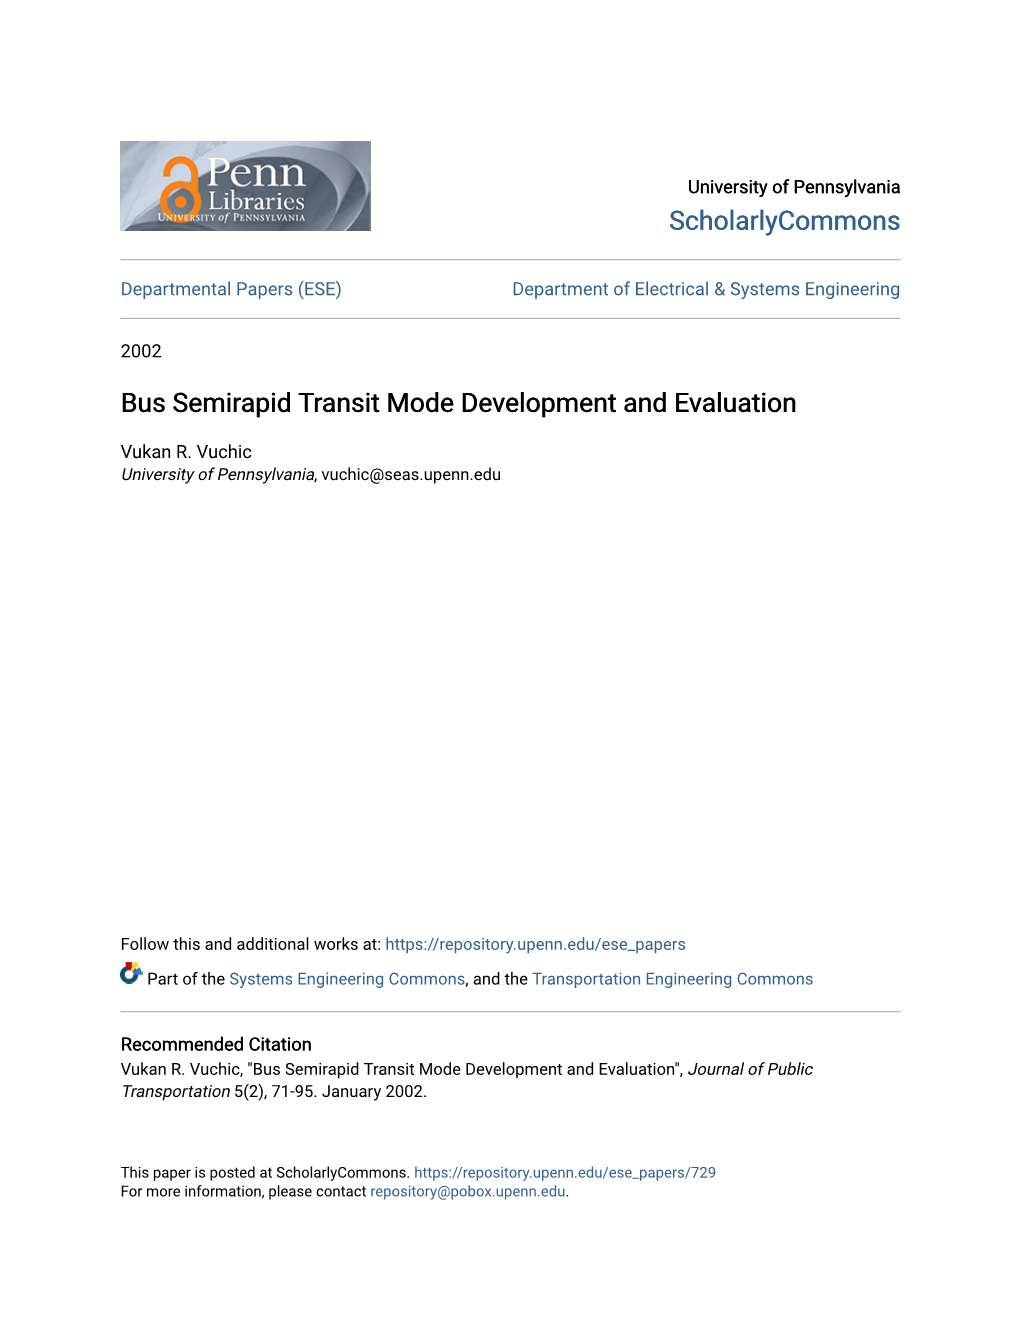 Bus Semirapid Transit Mode Development and Evaluation